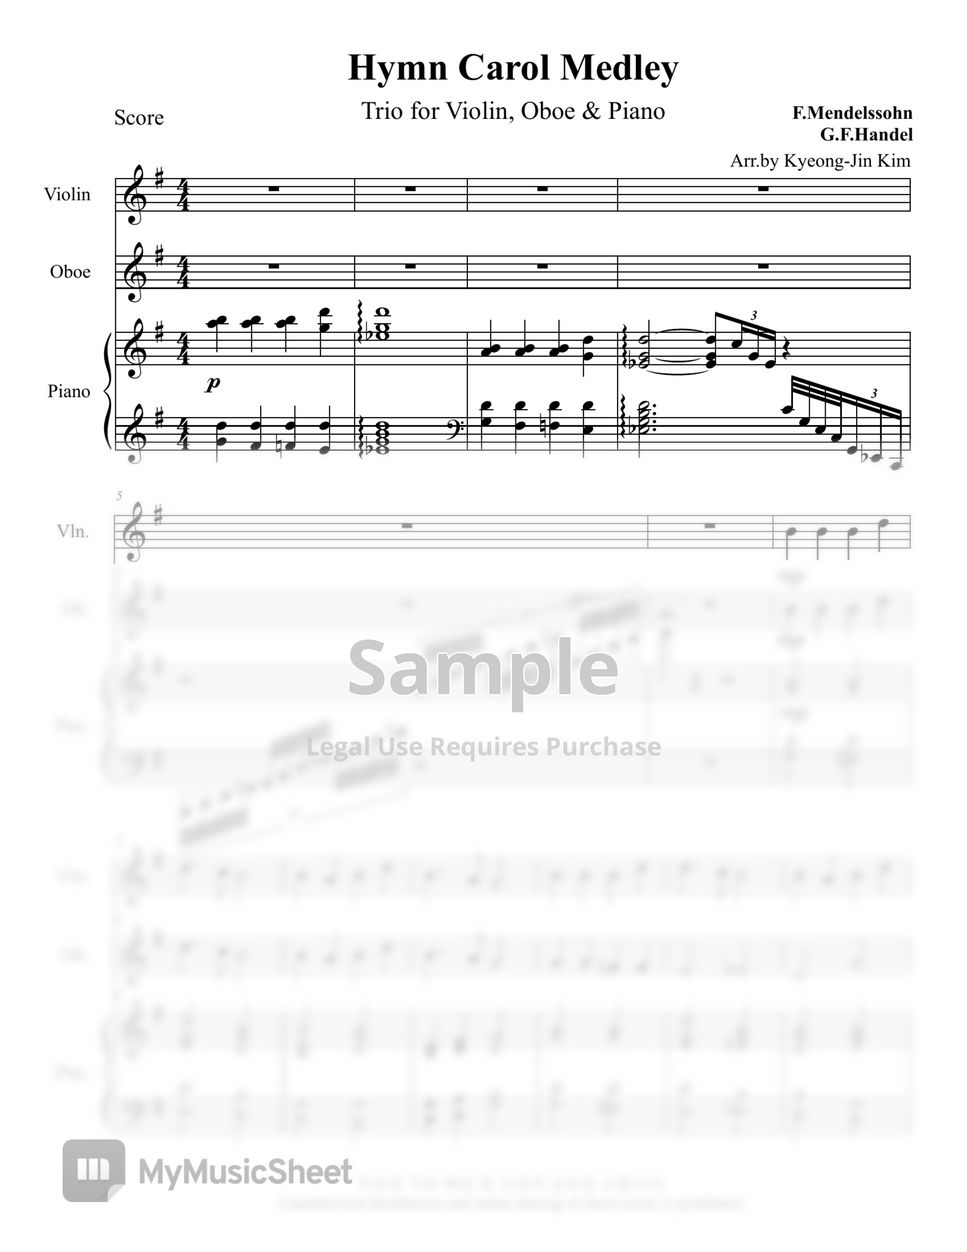 Traditional FrenchMelody, Arr. by E.S.Barnes/ F.Mendelssohn, Arr. by W.H. Cummings/ G.F.Handel Arr. by L.Mason - 크리스마스 캐롤 메들리 No.1 (피아노 트리오(바이올린, 오보에, 피아노)) by Pianist Jin